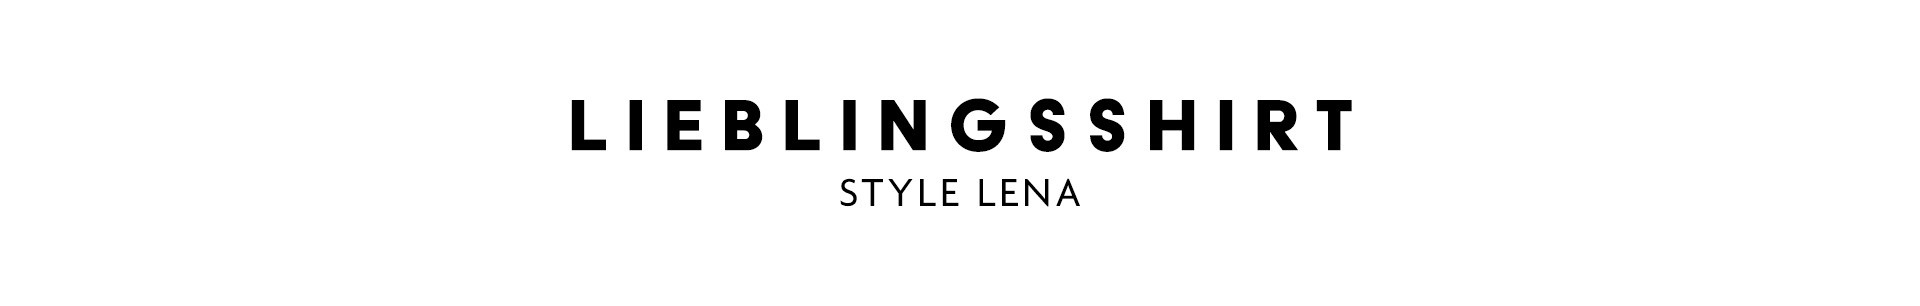 Lieblingsshirt – Style Lena